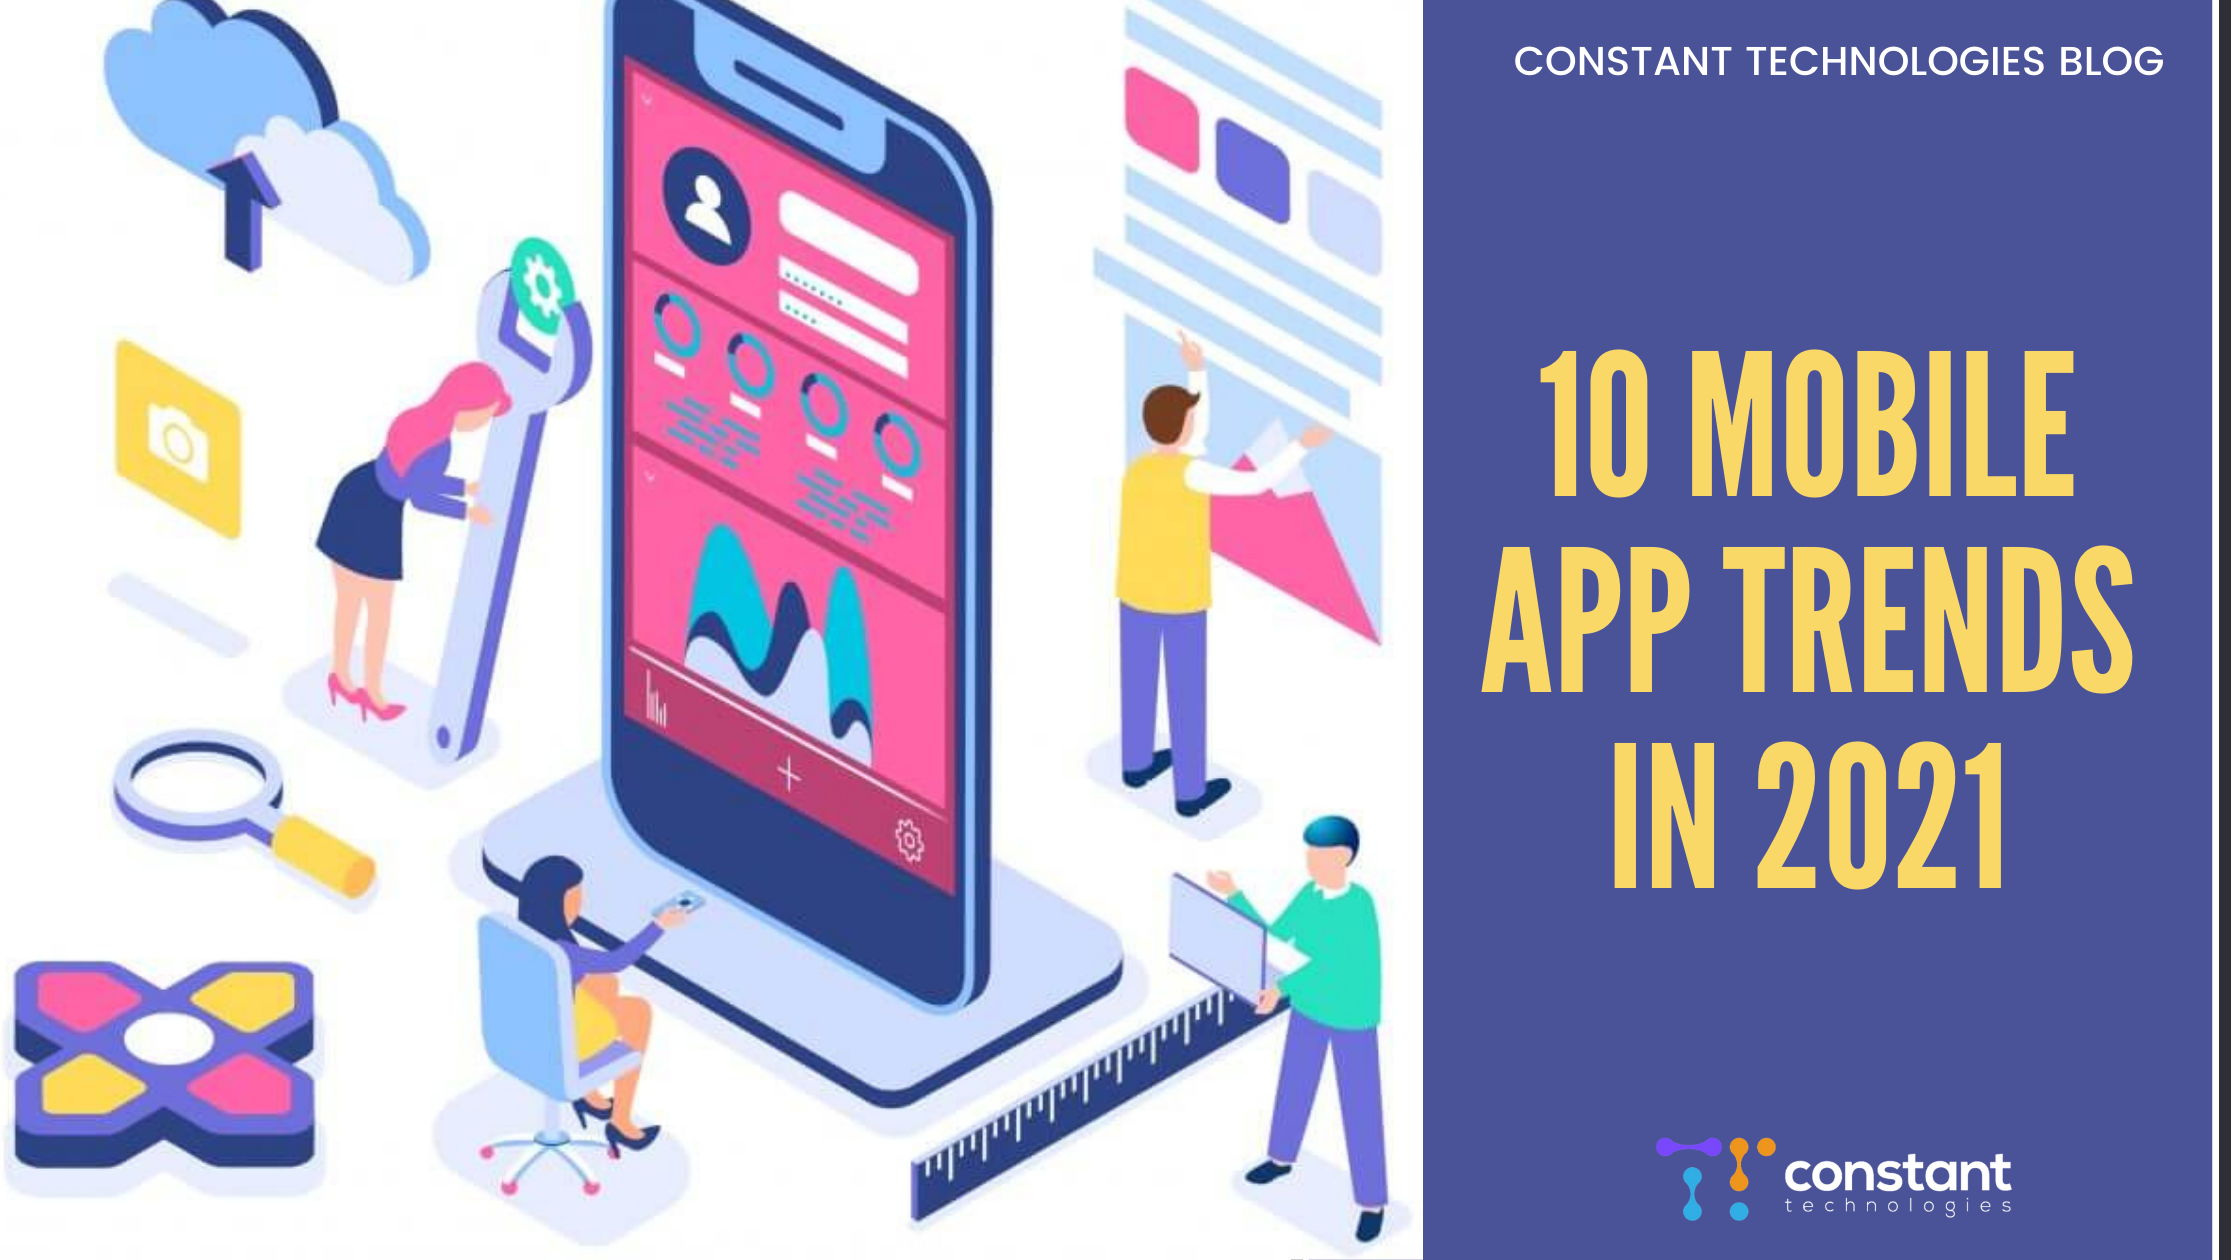 " 10 Mobile App Trends in 2021"